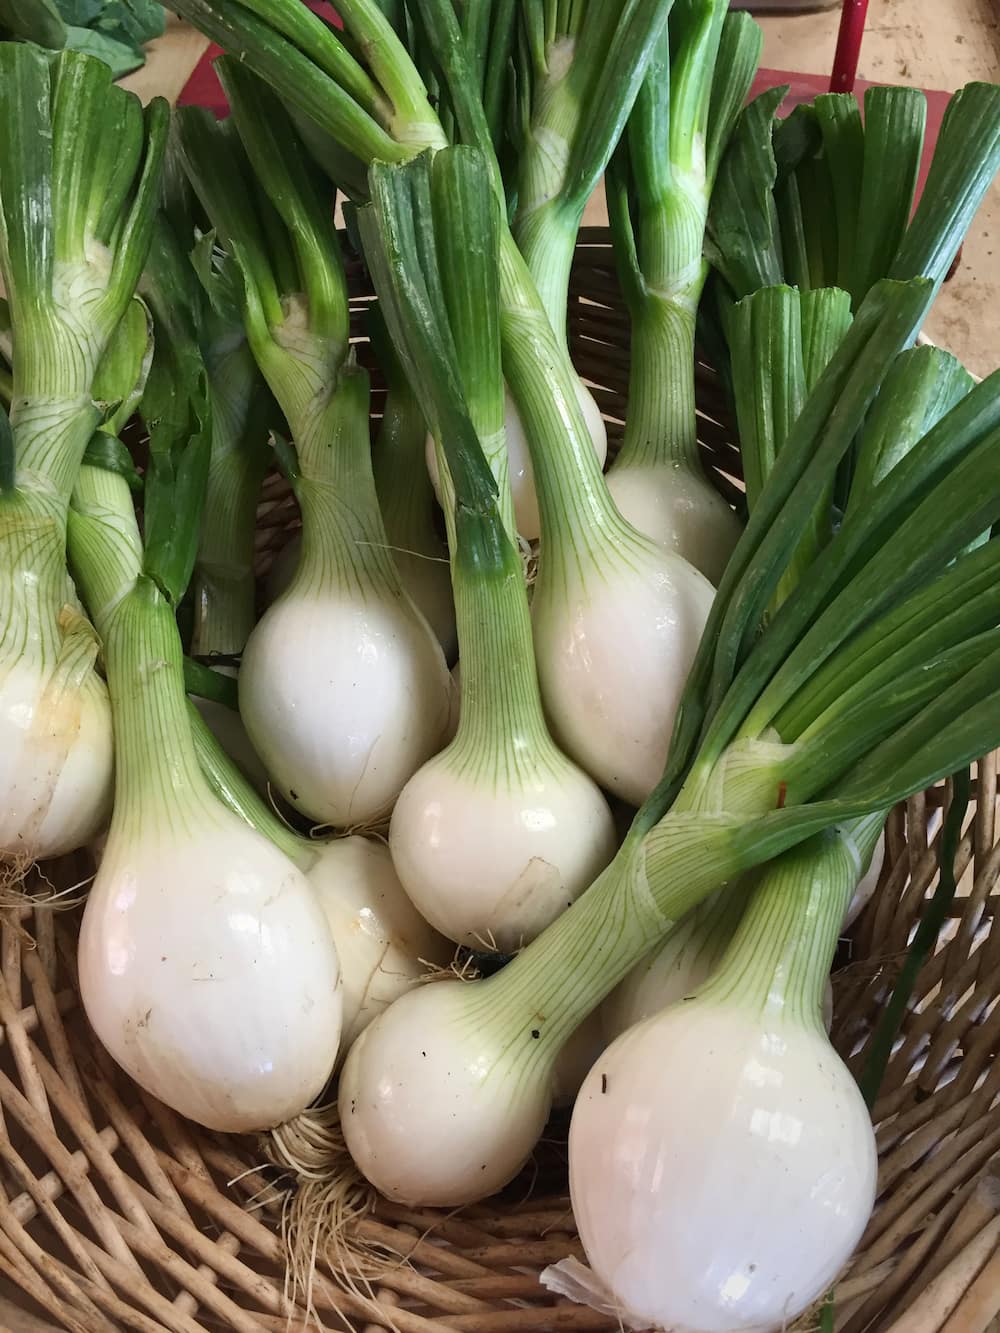 How long do onions last